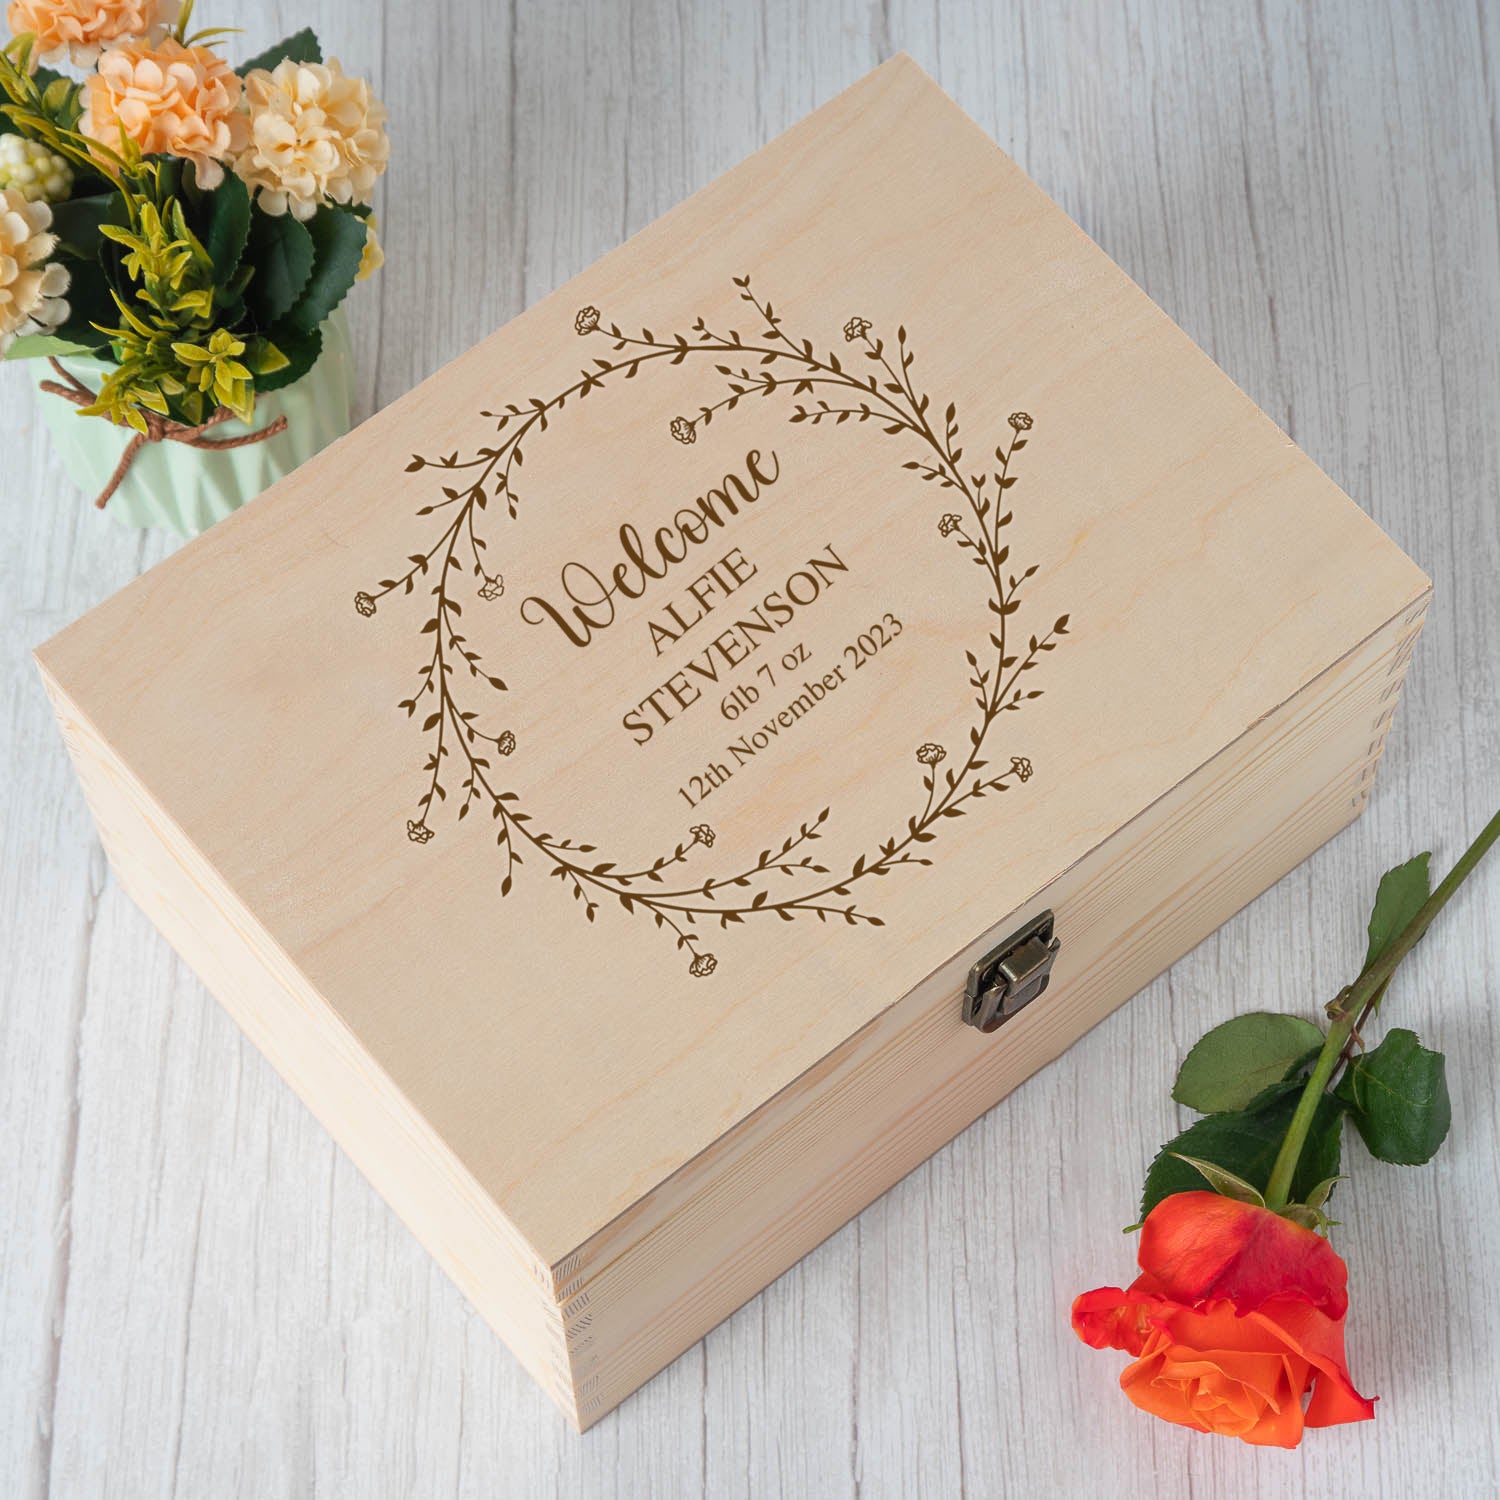 Wooden Wedding Memory Box